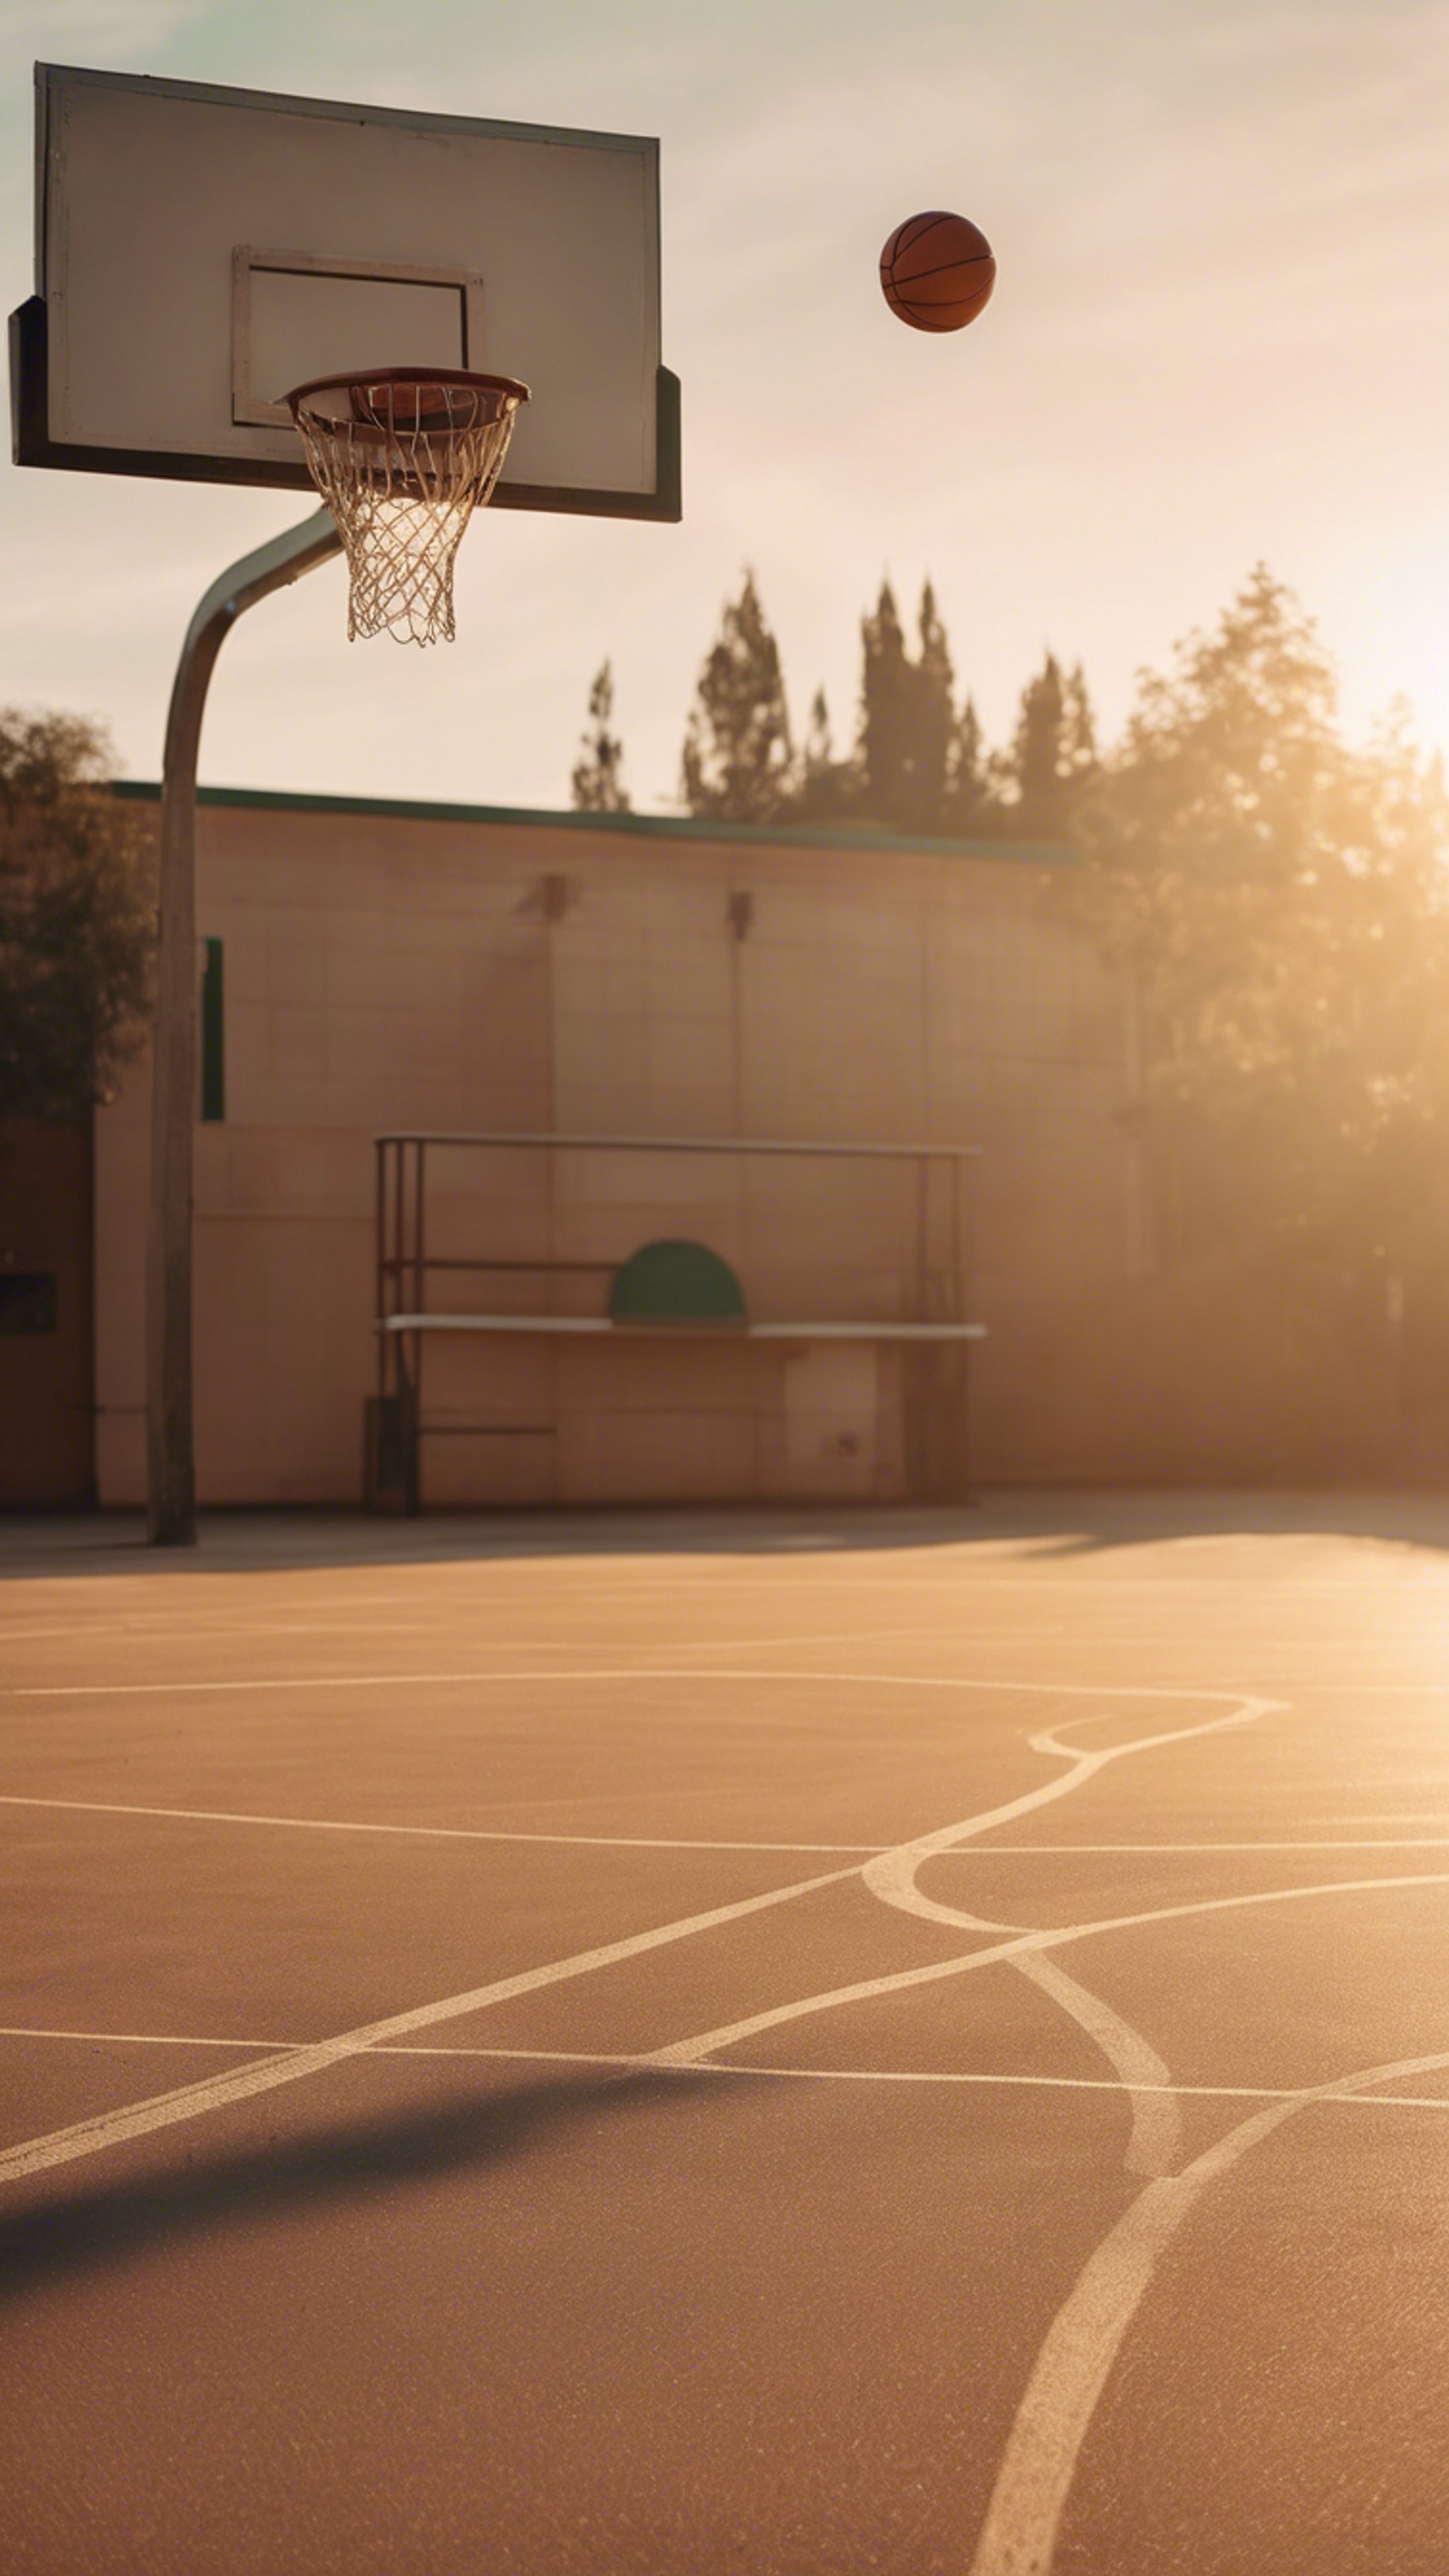 A deserted school’s basketball court in the pacific golden light of sunset. Tapeta[5d35315ab9de41dcbc38]